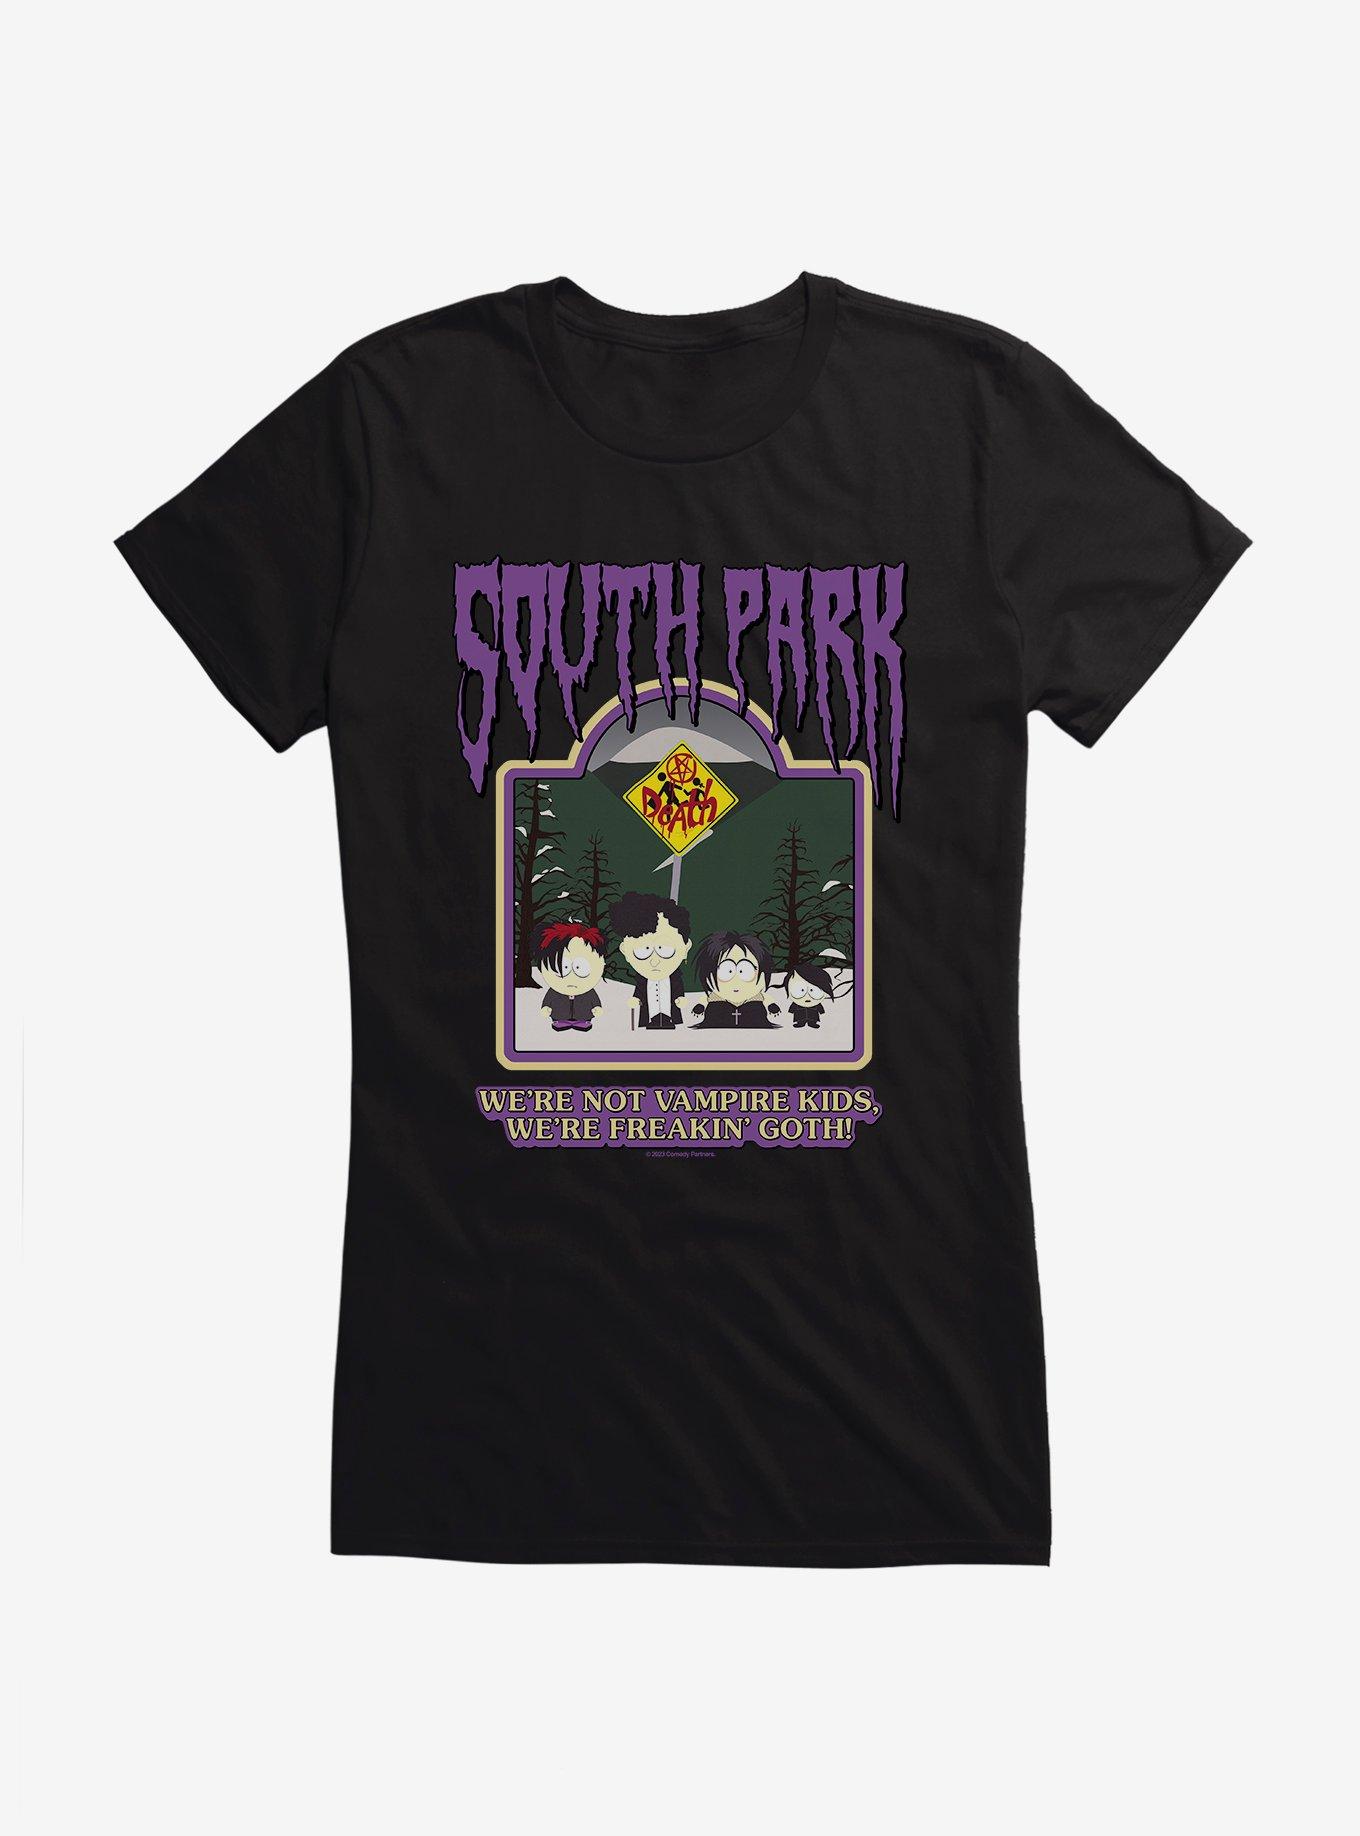 South Park We're Freakin Goth! Girls T-Shirt, BLACK, hi-res